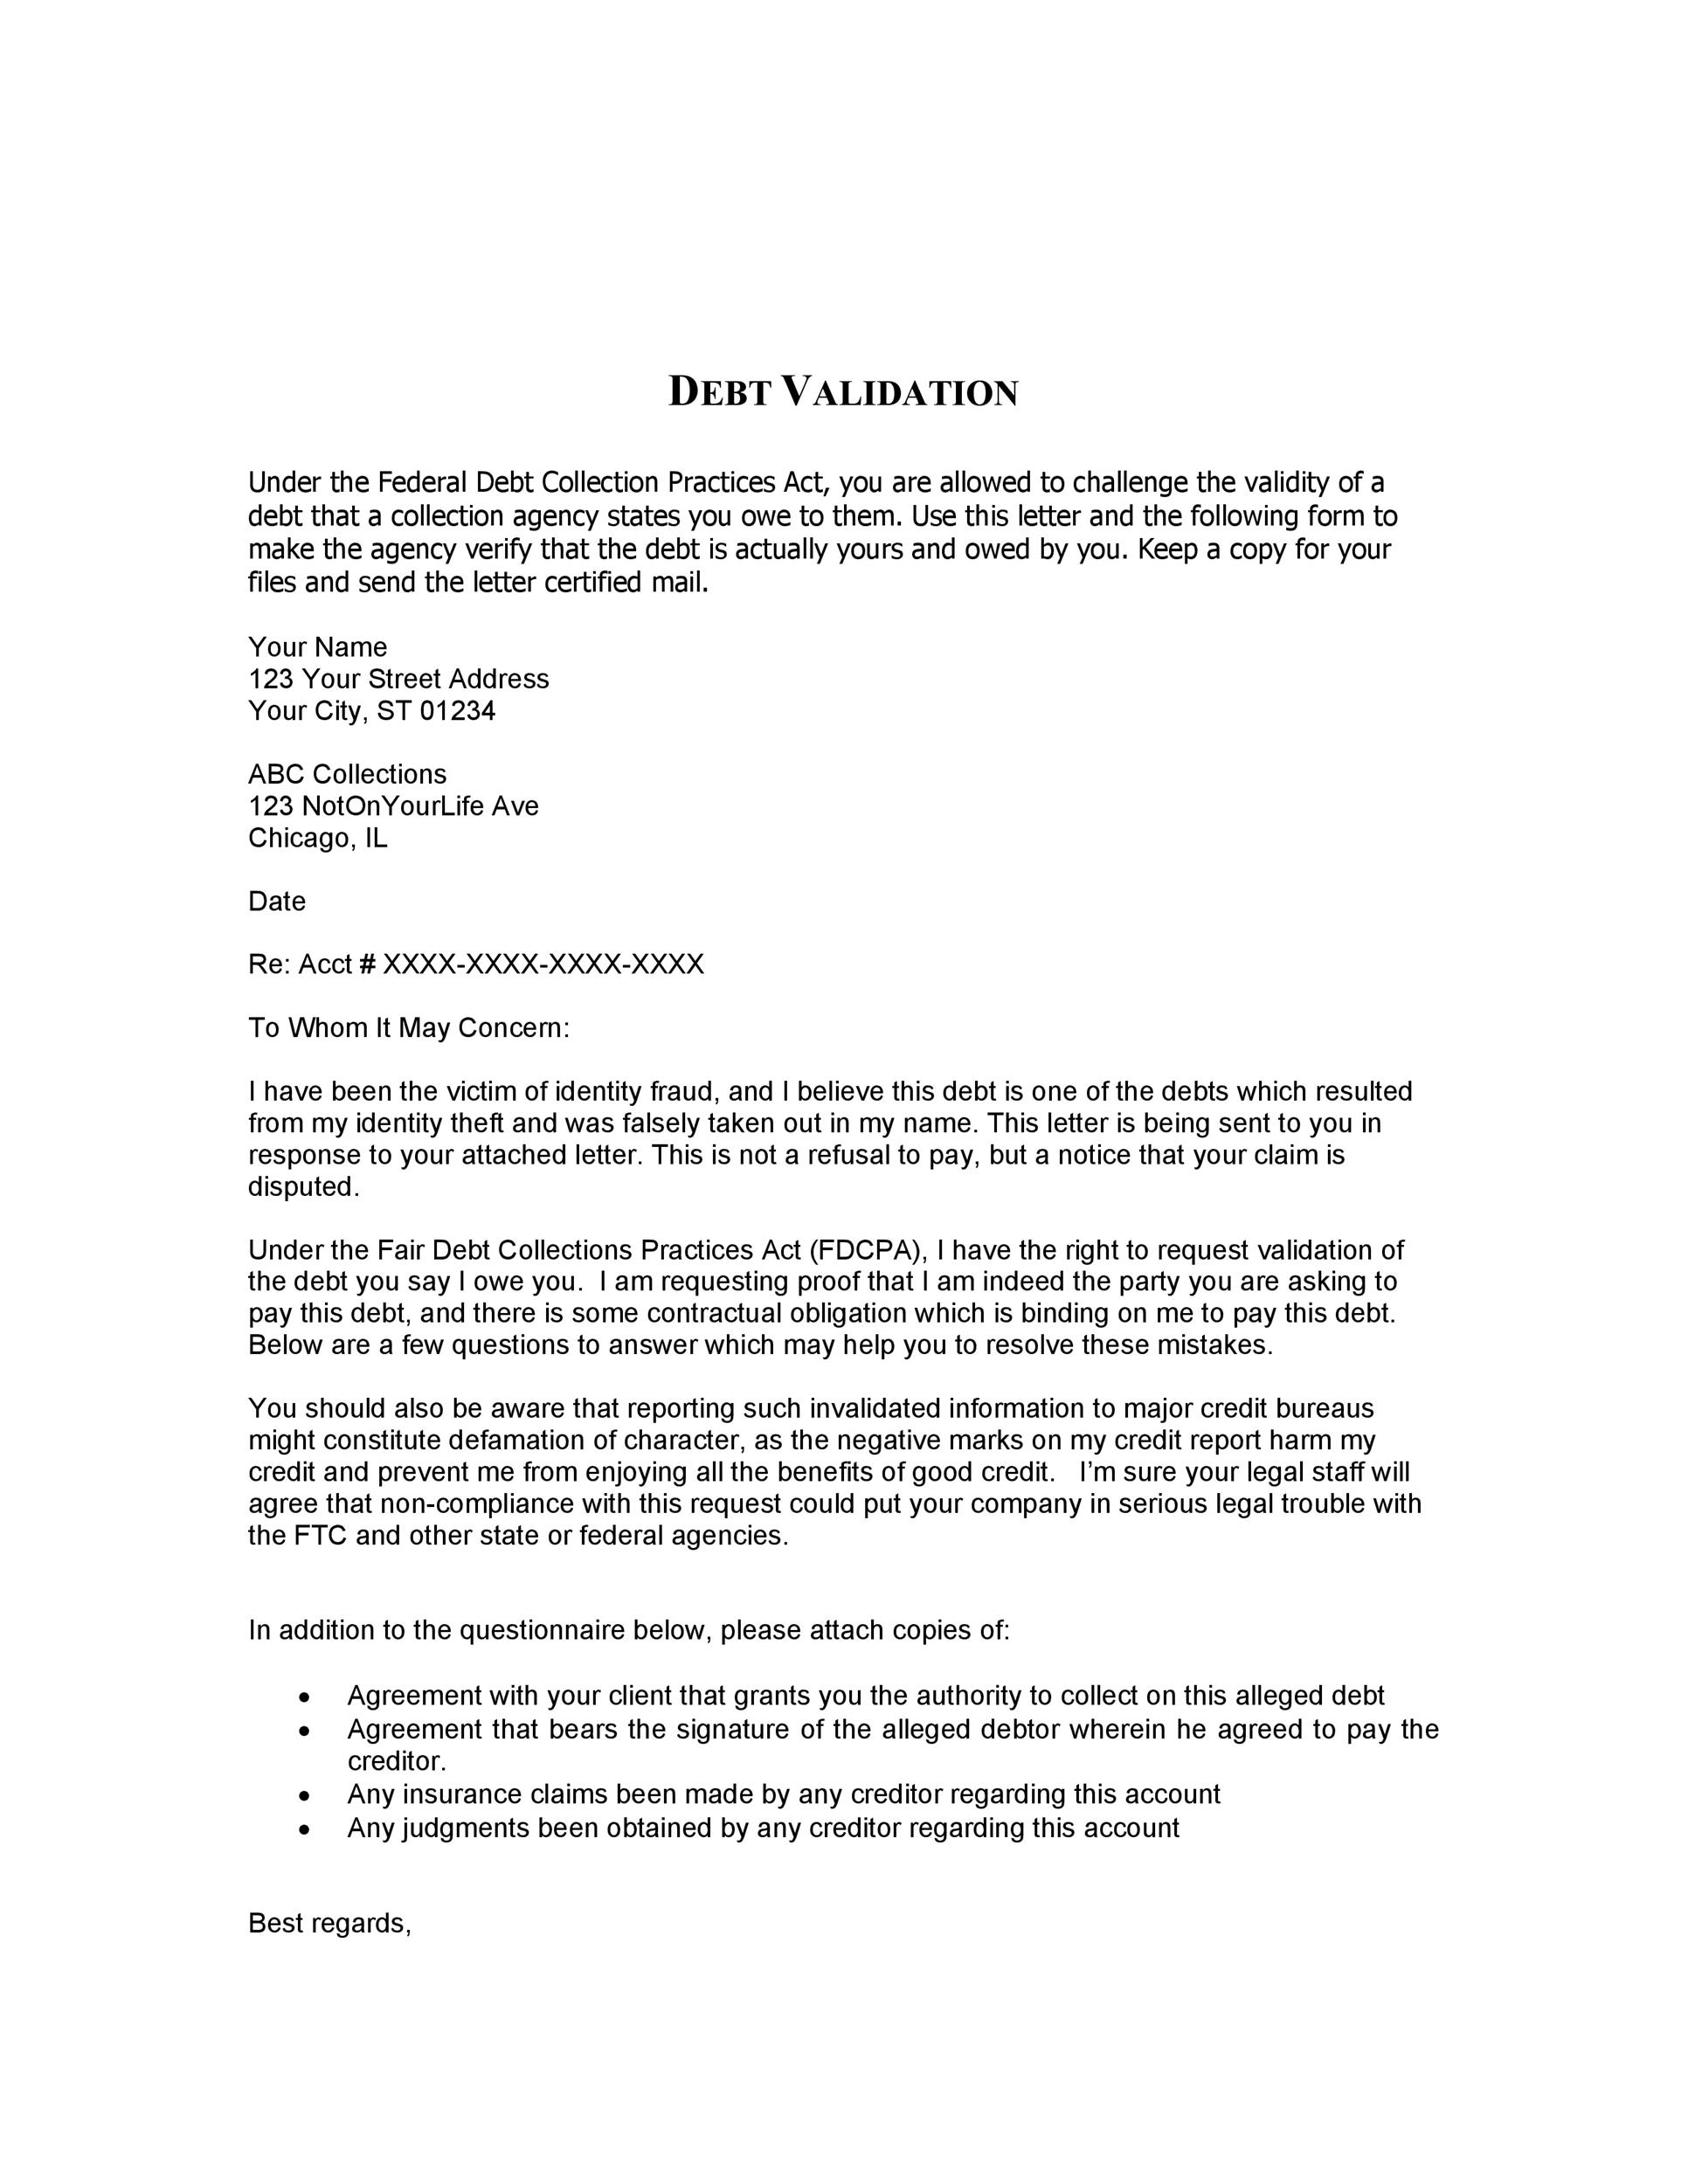 50-free-debt-validation-letter-samples-templates-templatelab